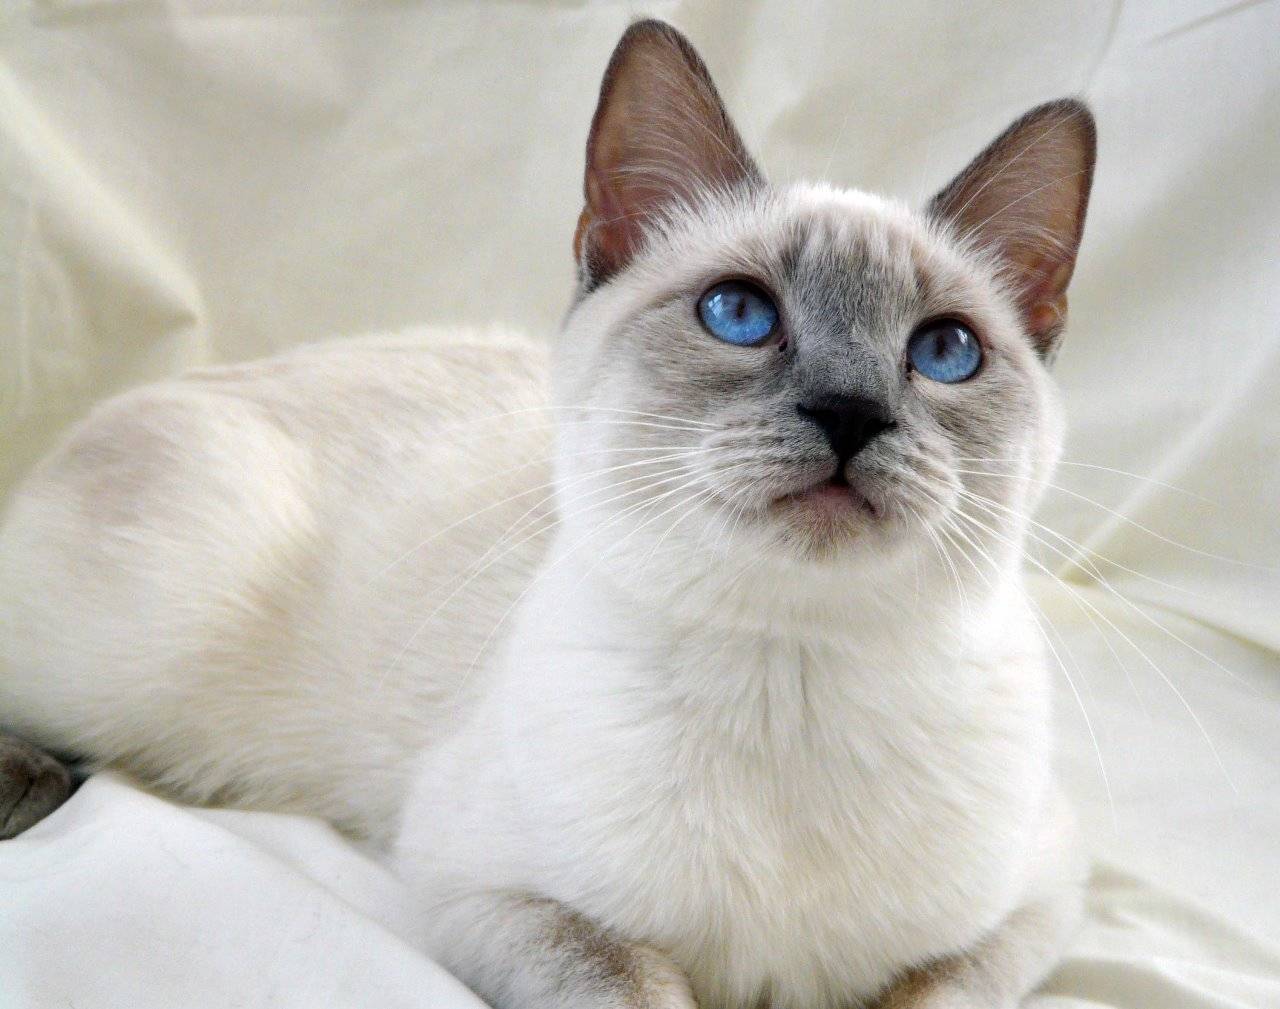 Сиамская кошка: описание породы и характеристика